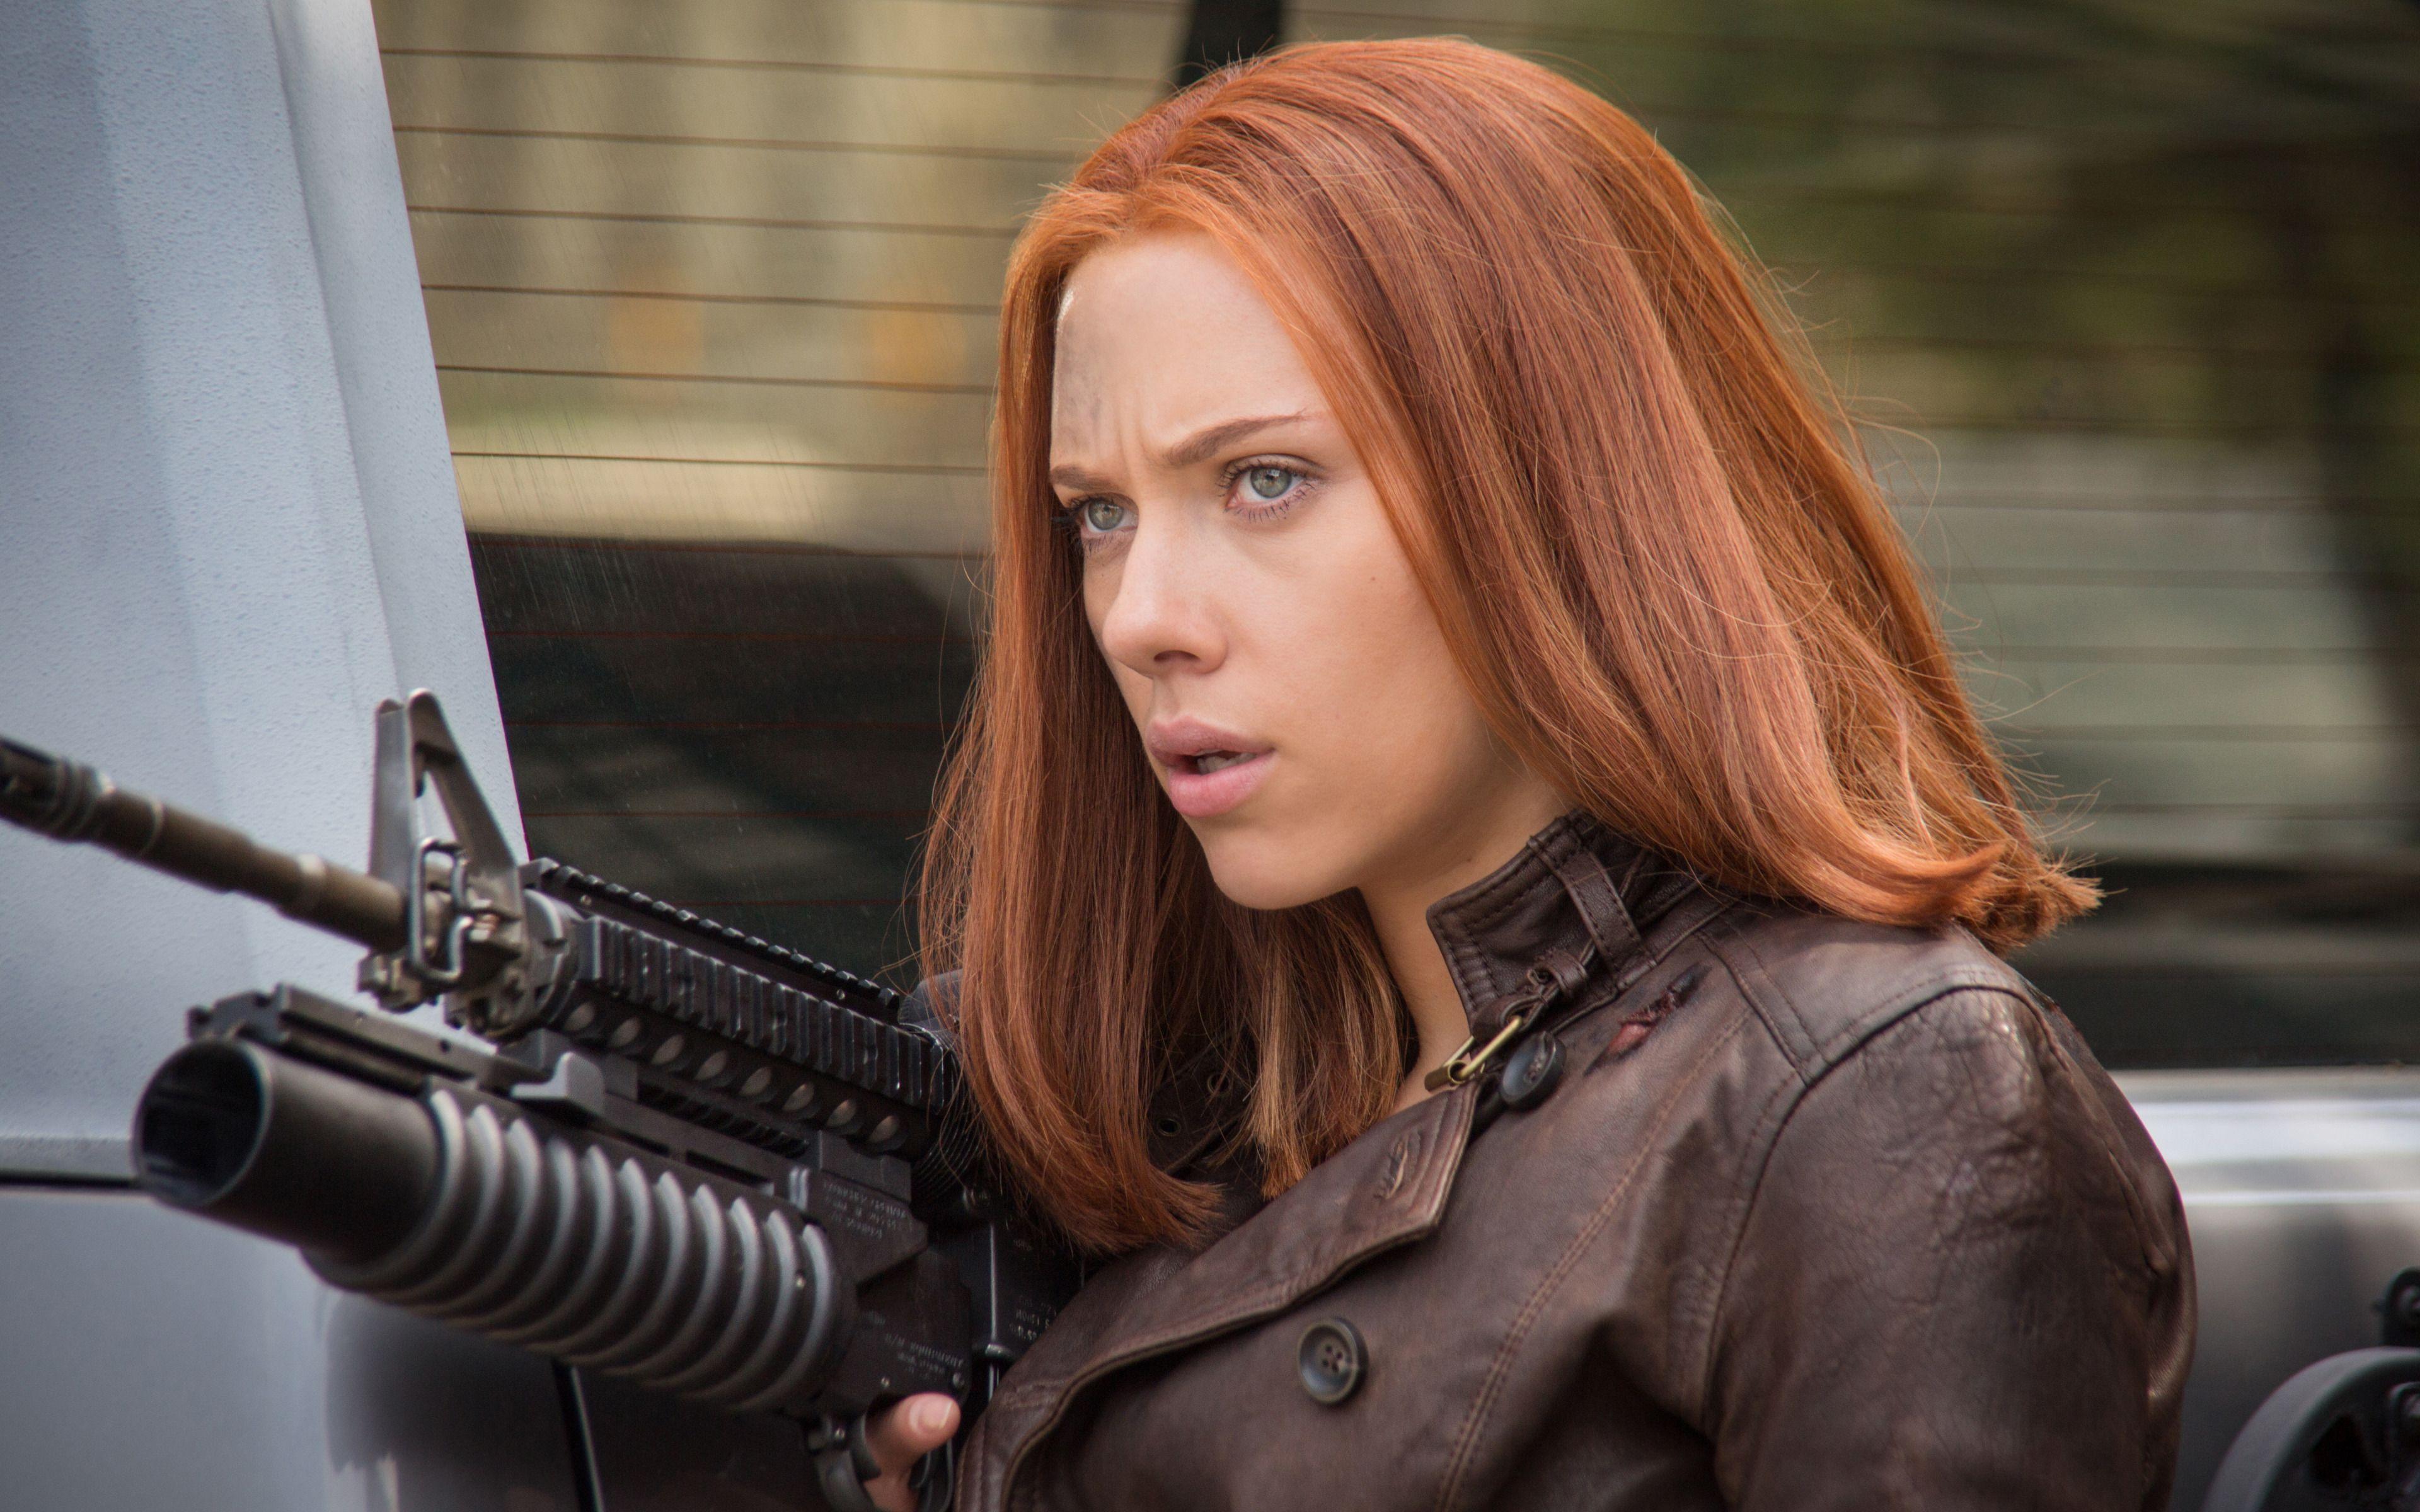 Captain America The Winter Soldier, Scarlett Johansson